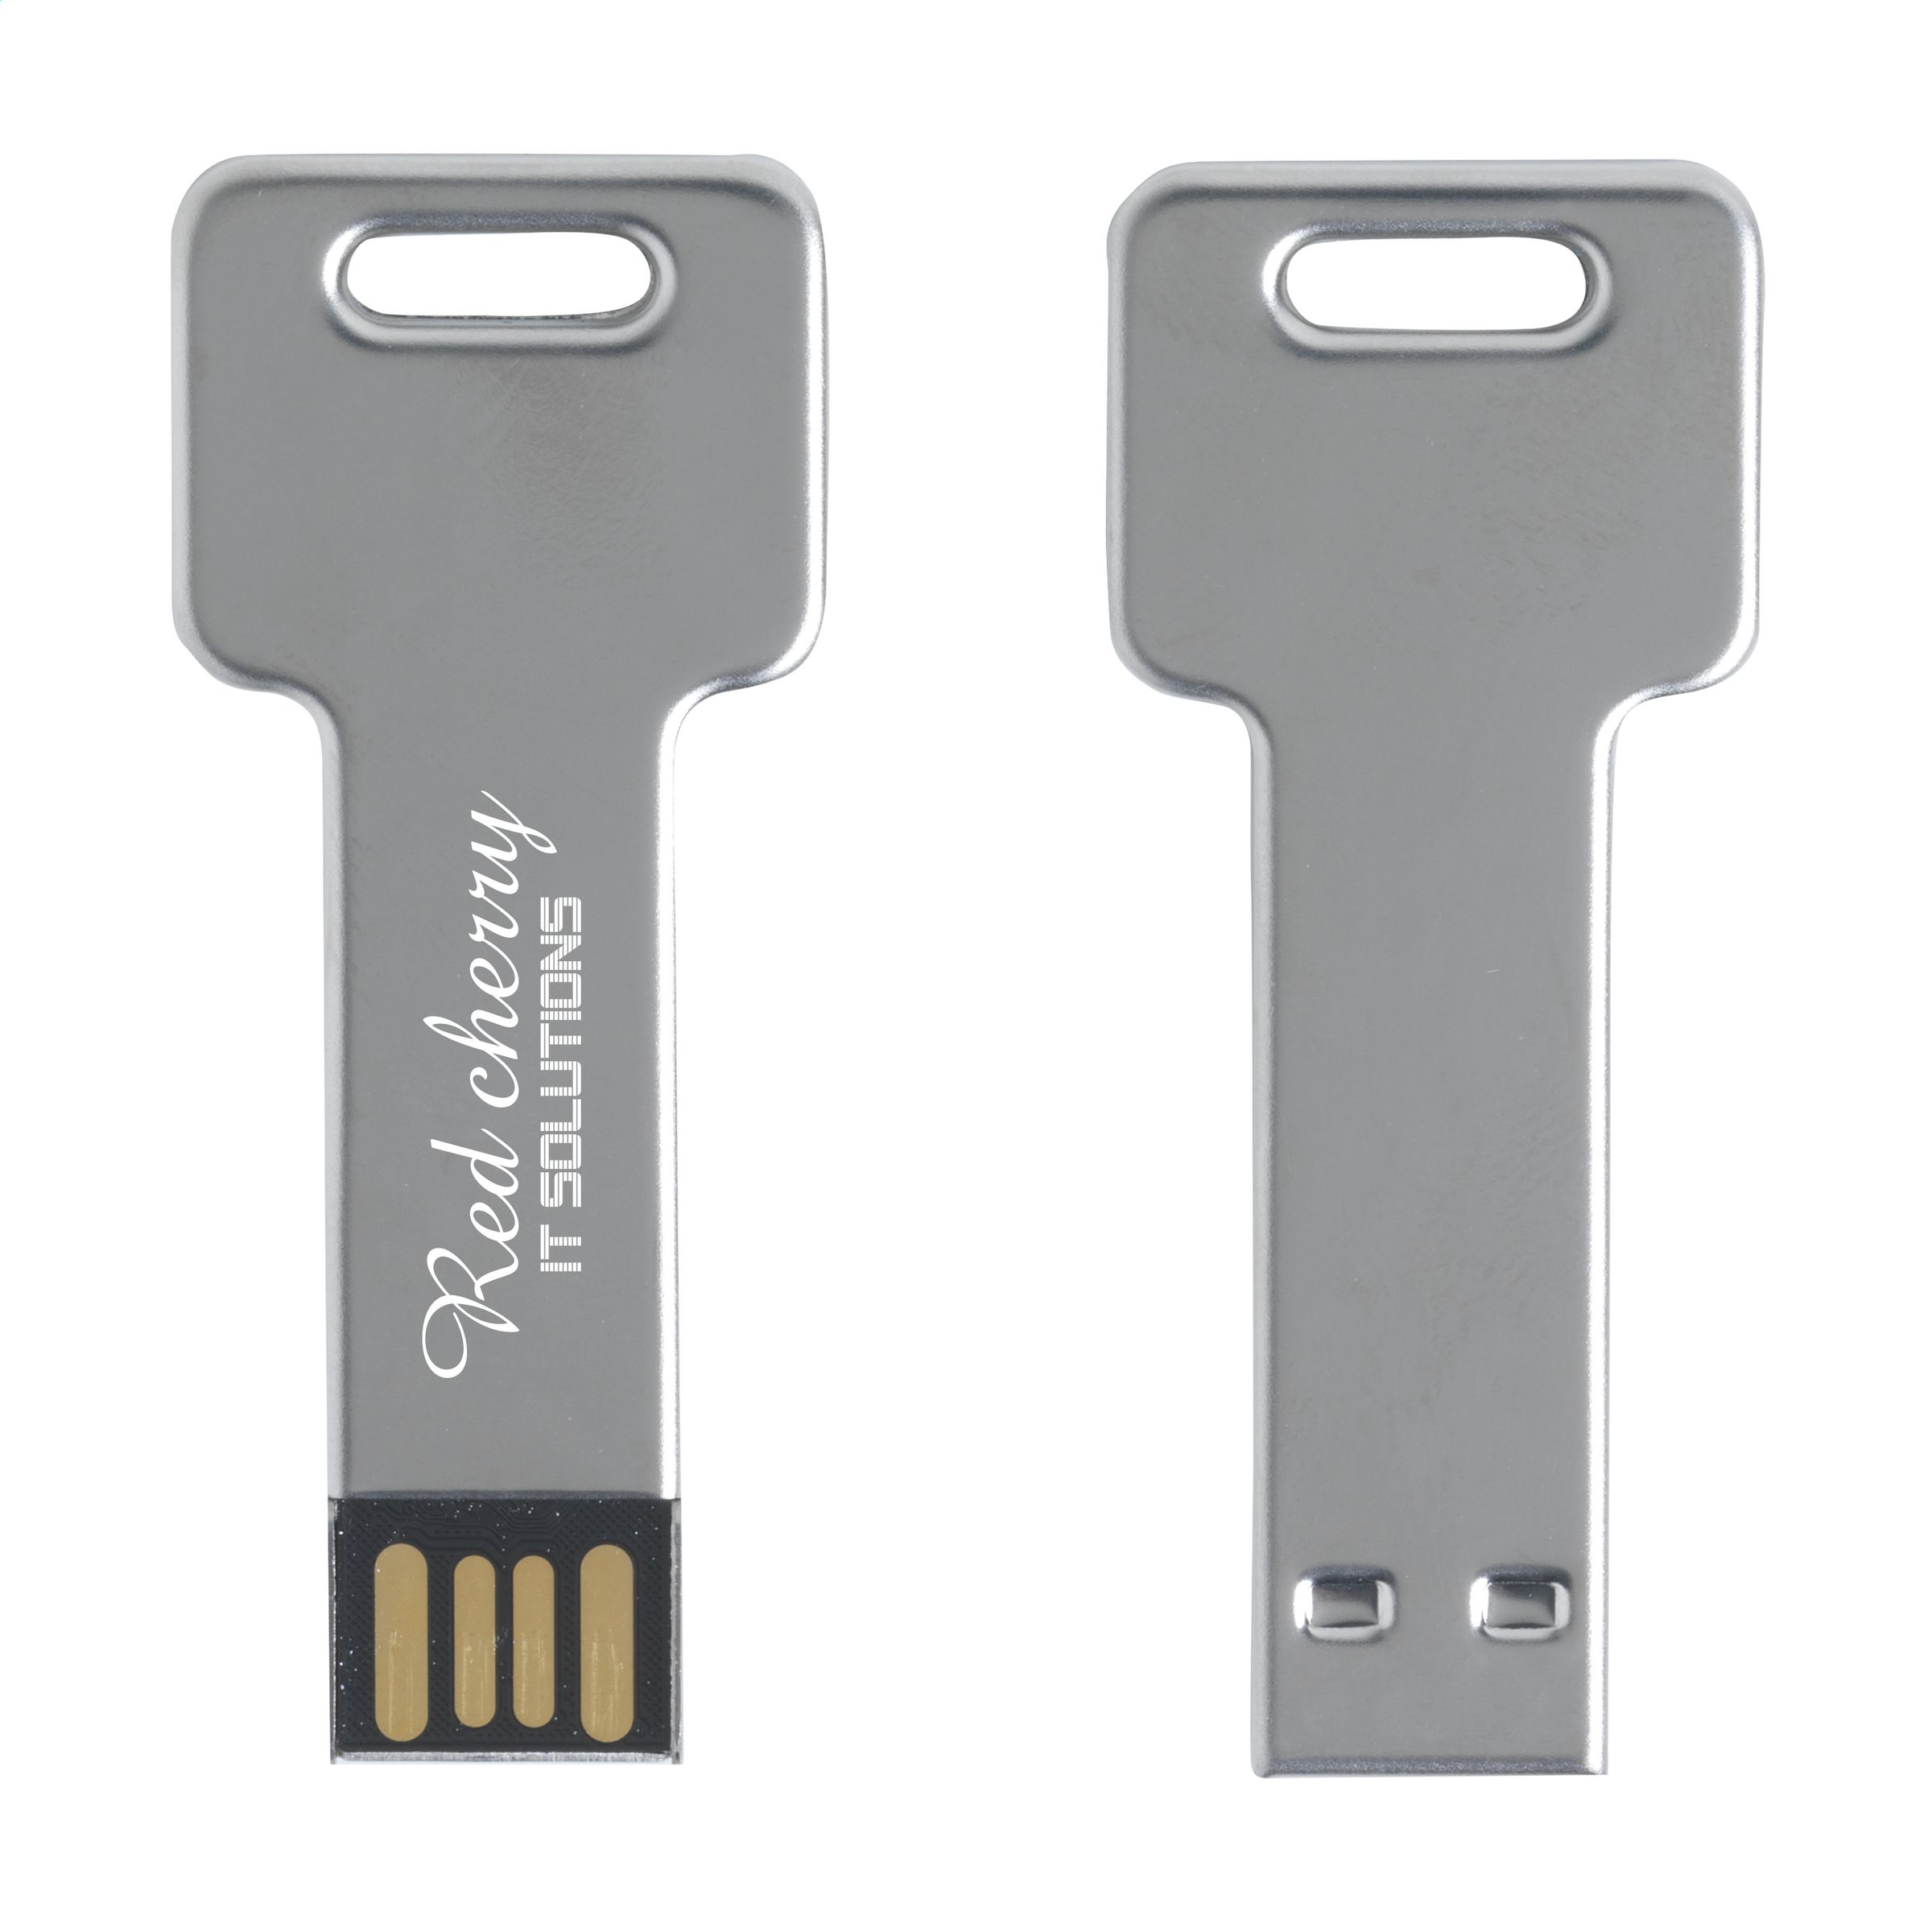 Chiave USB - San Giovanni Lipioni